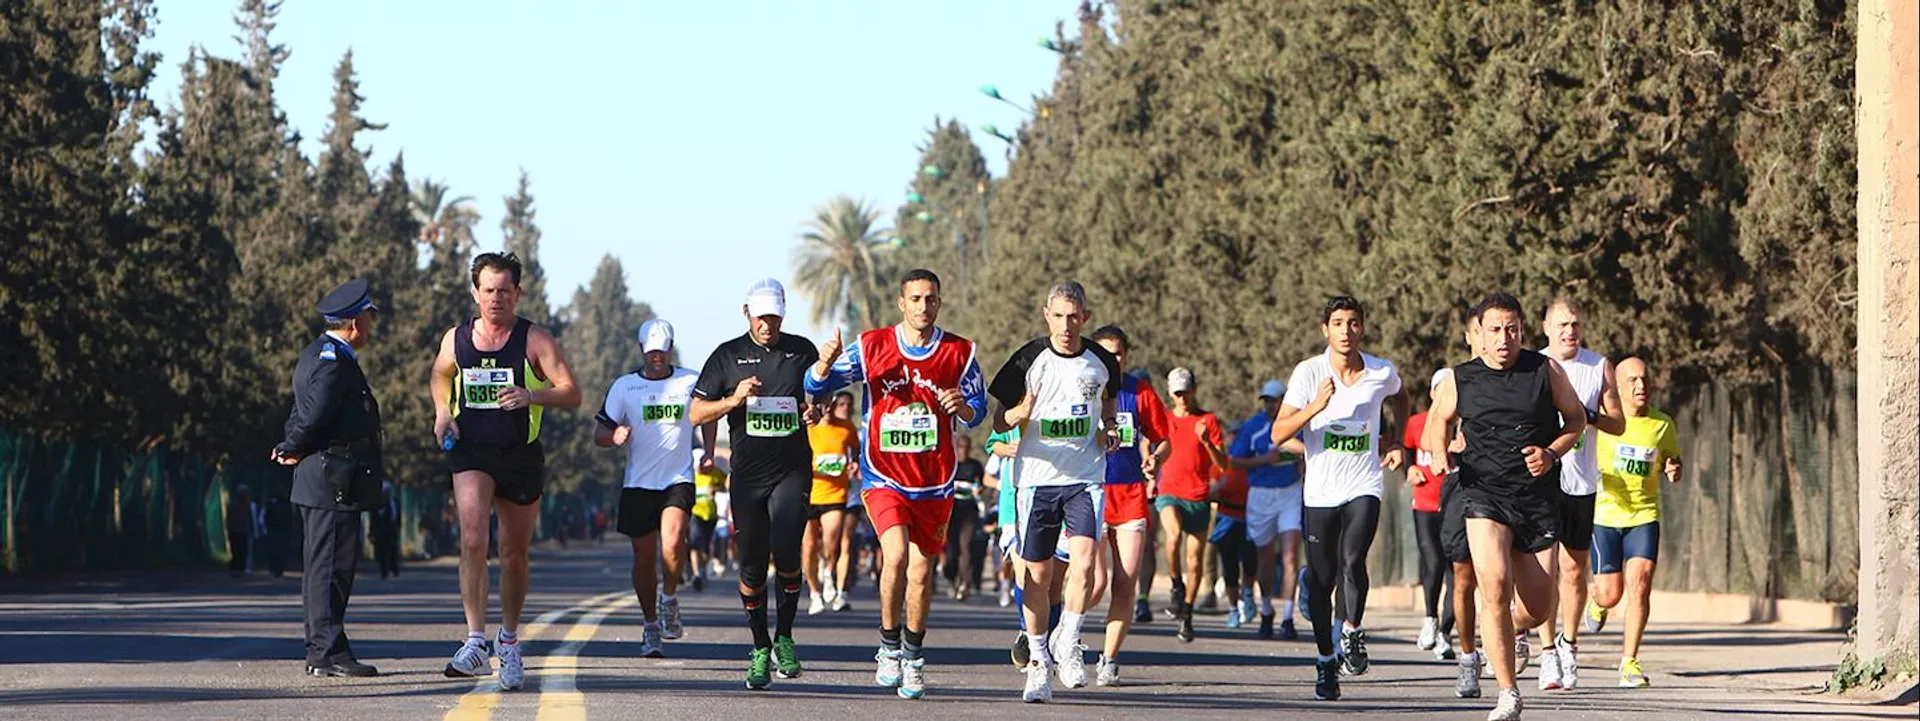 International Marathon of Marrakech